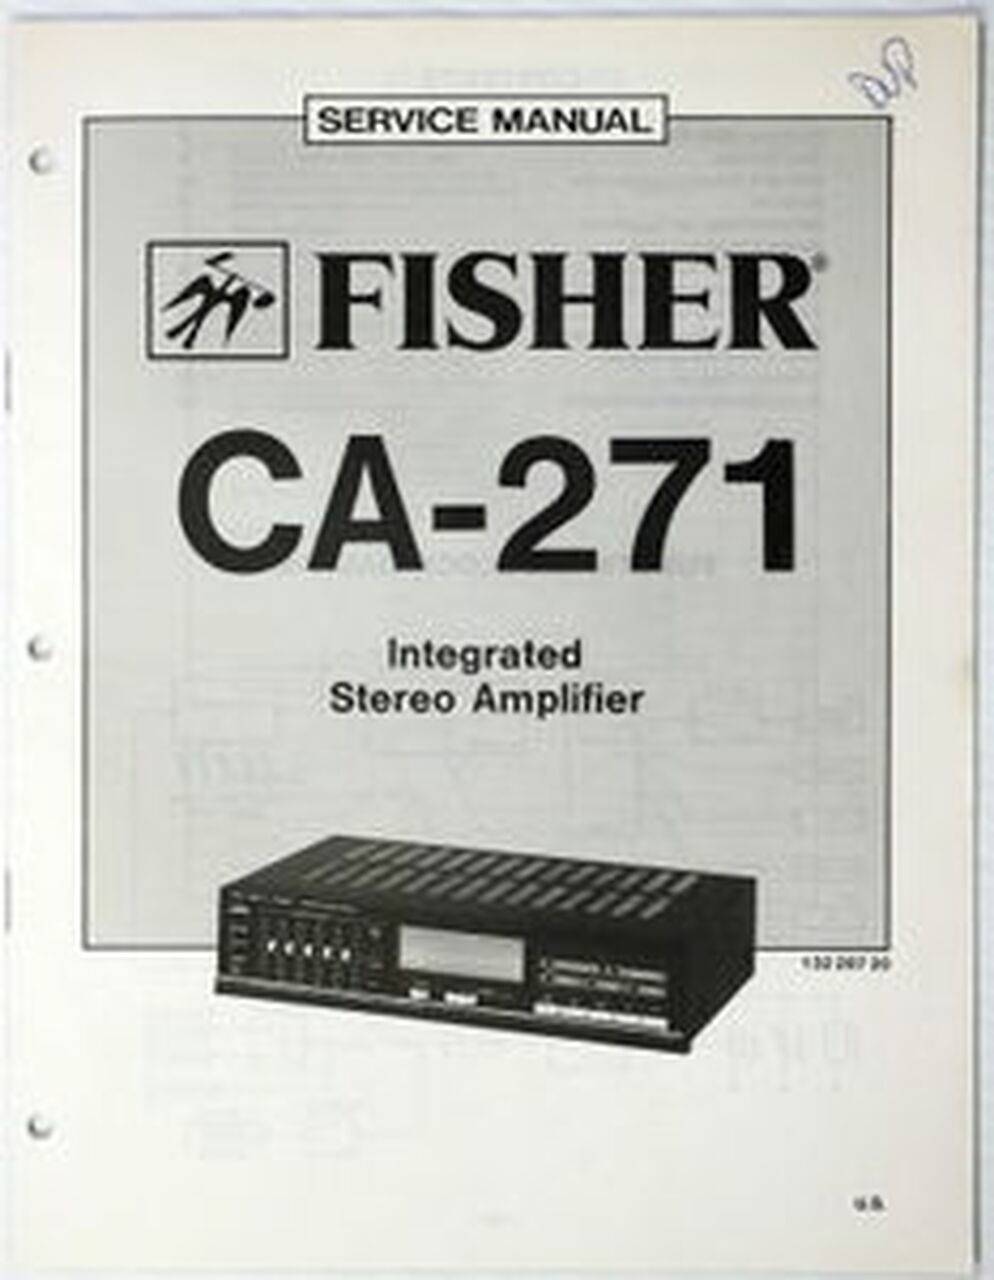 Fisher CA-271